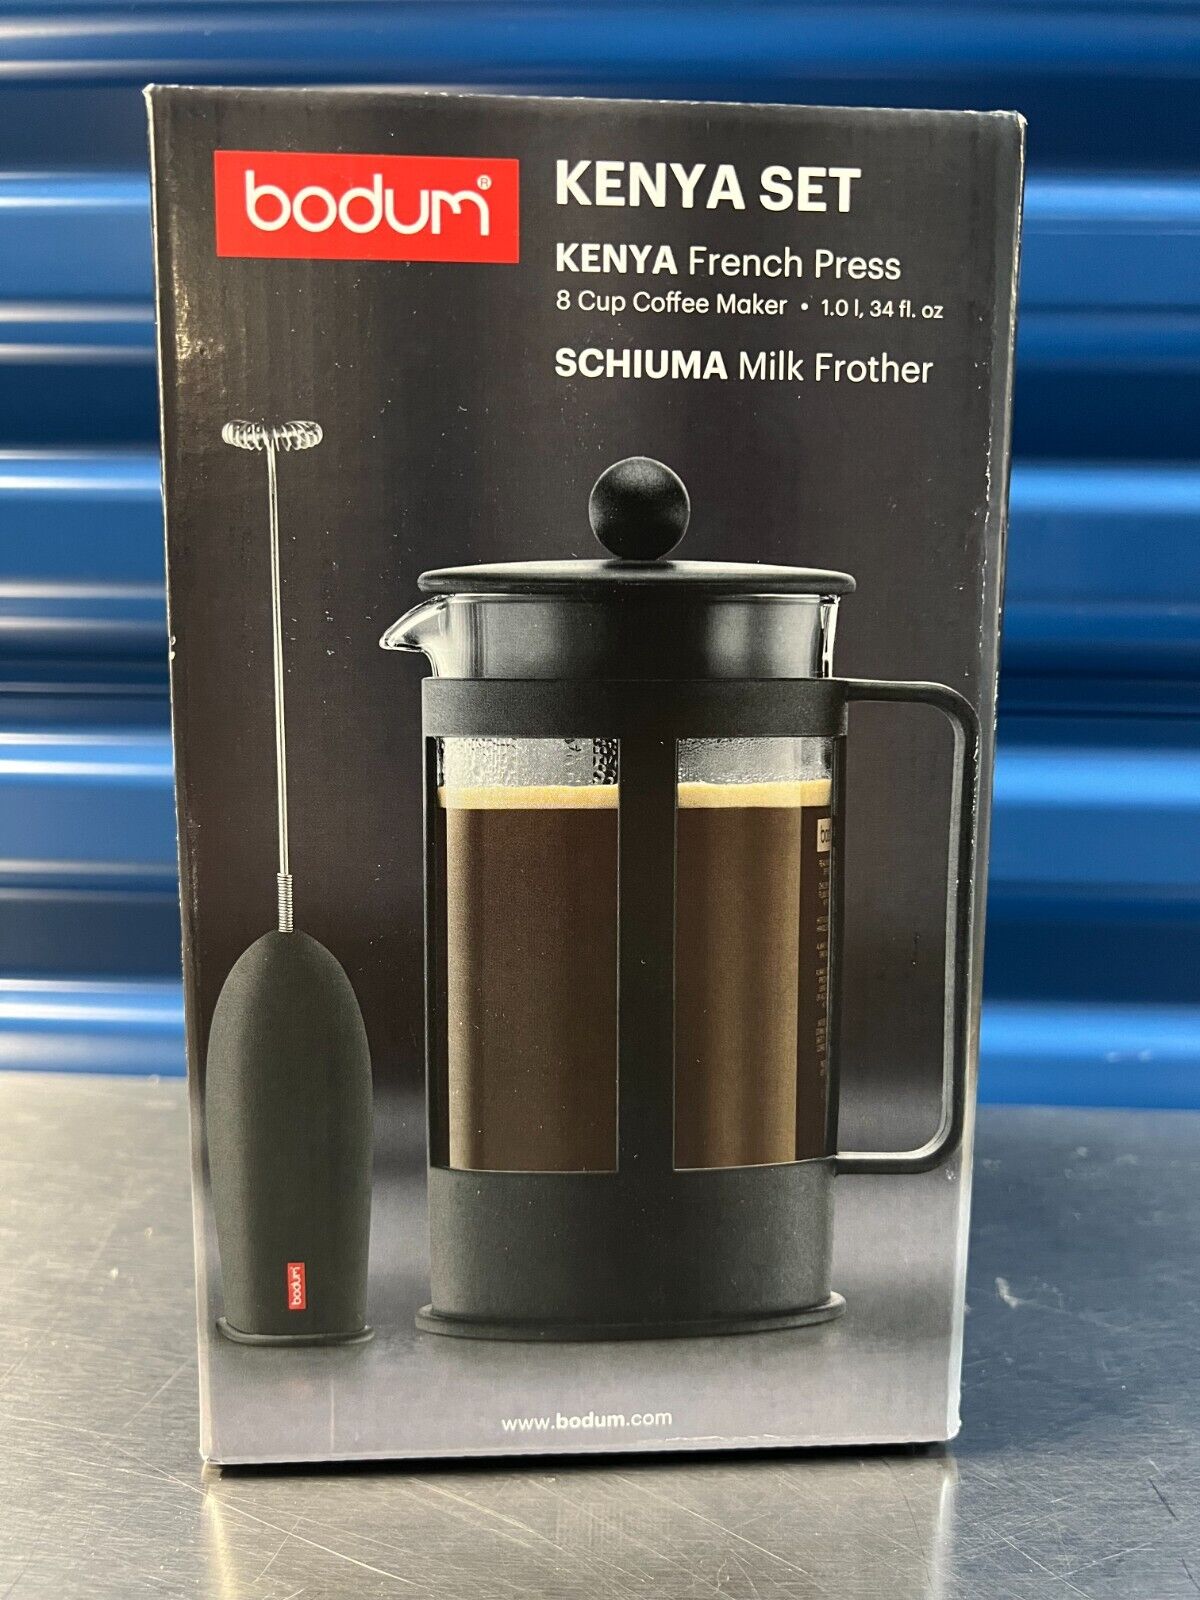 Bodum Kenya Set 8 Cup French Press + Schiuma Milk Frother Kit No K1788